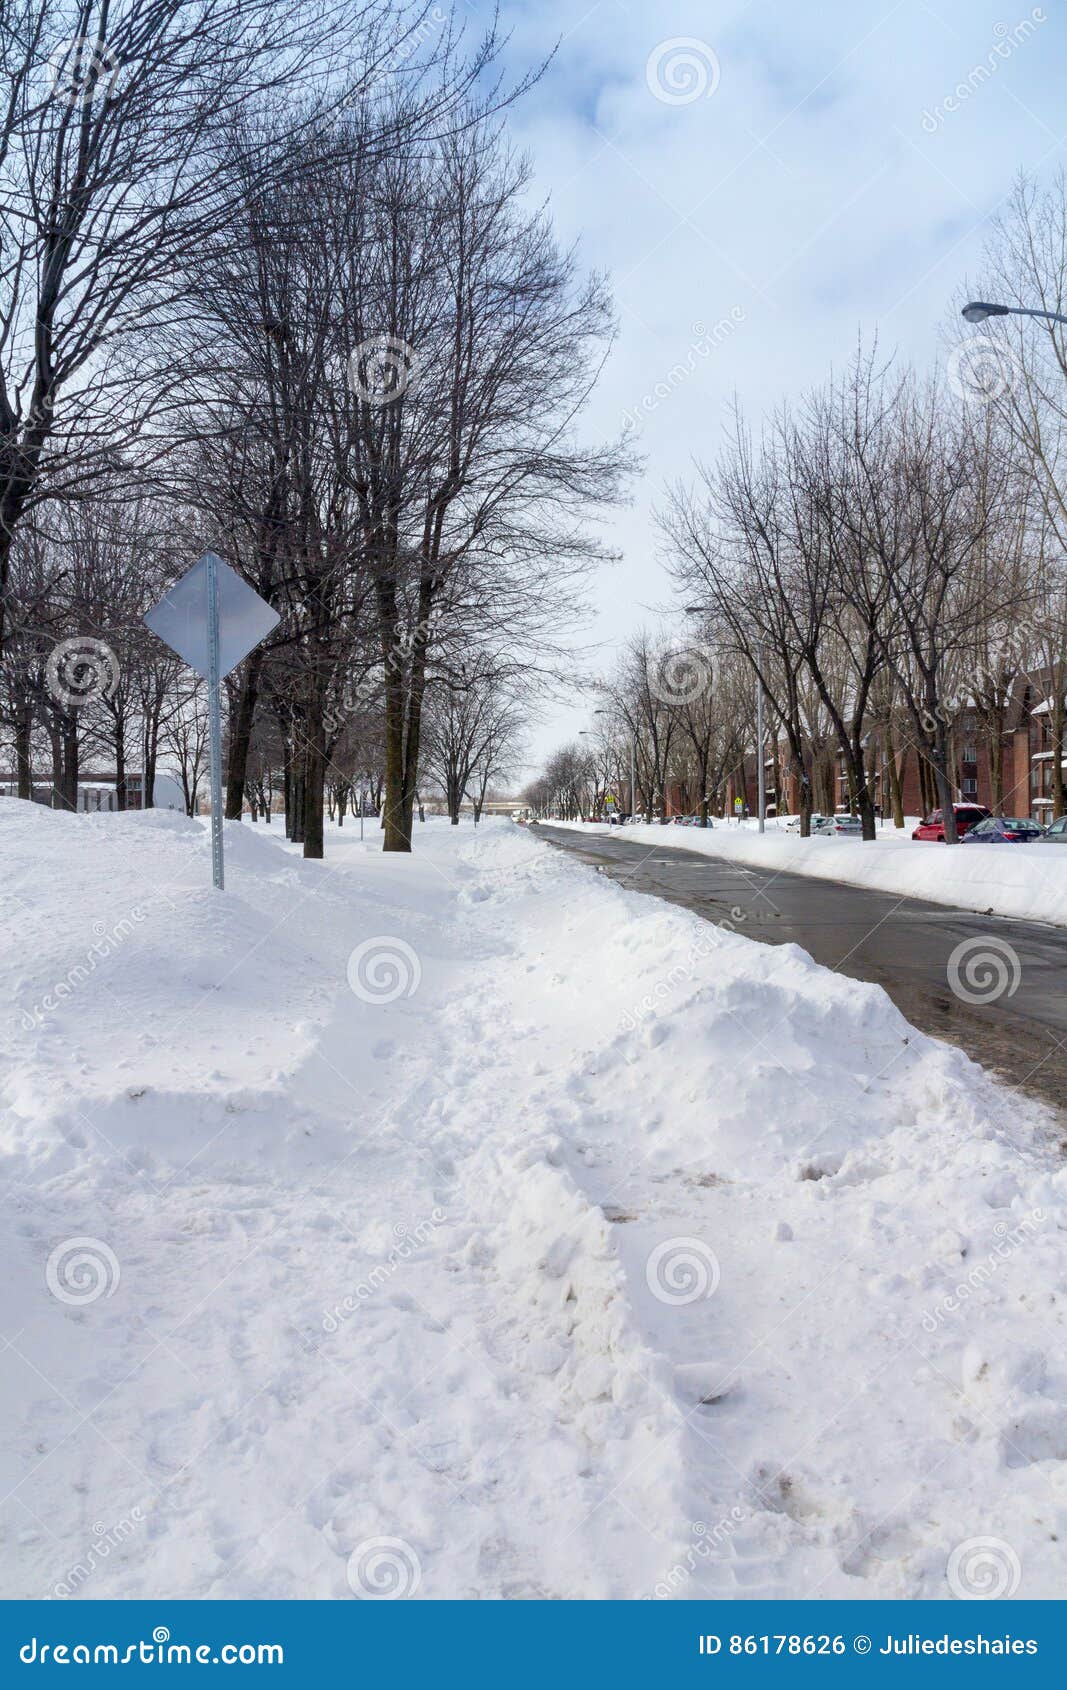 street after a snowfall